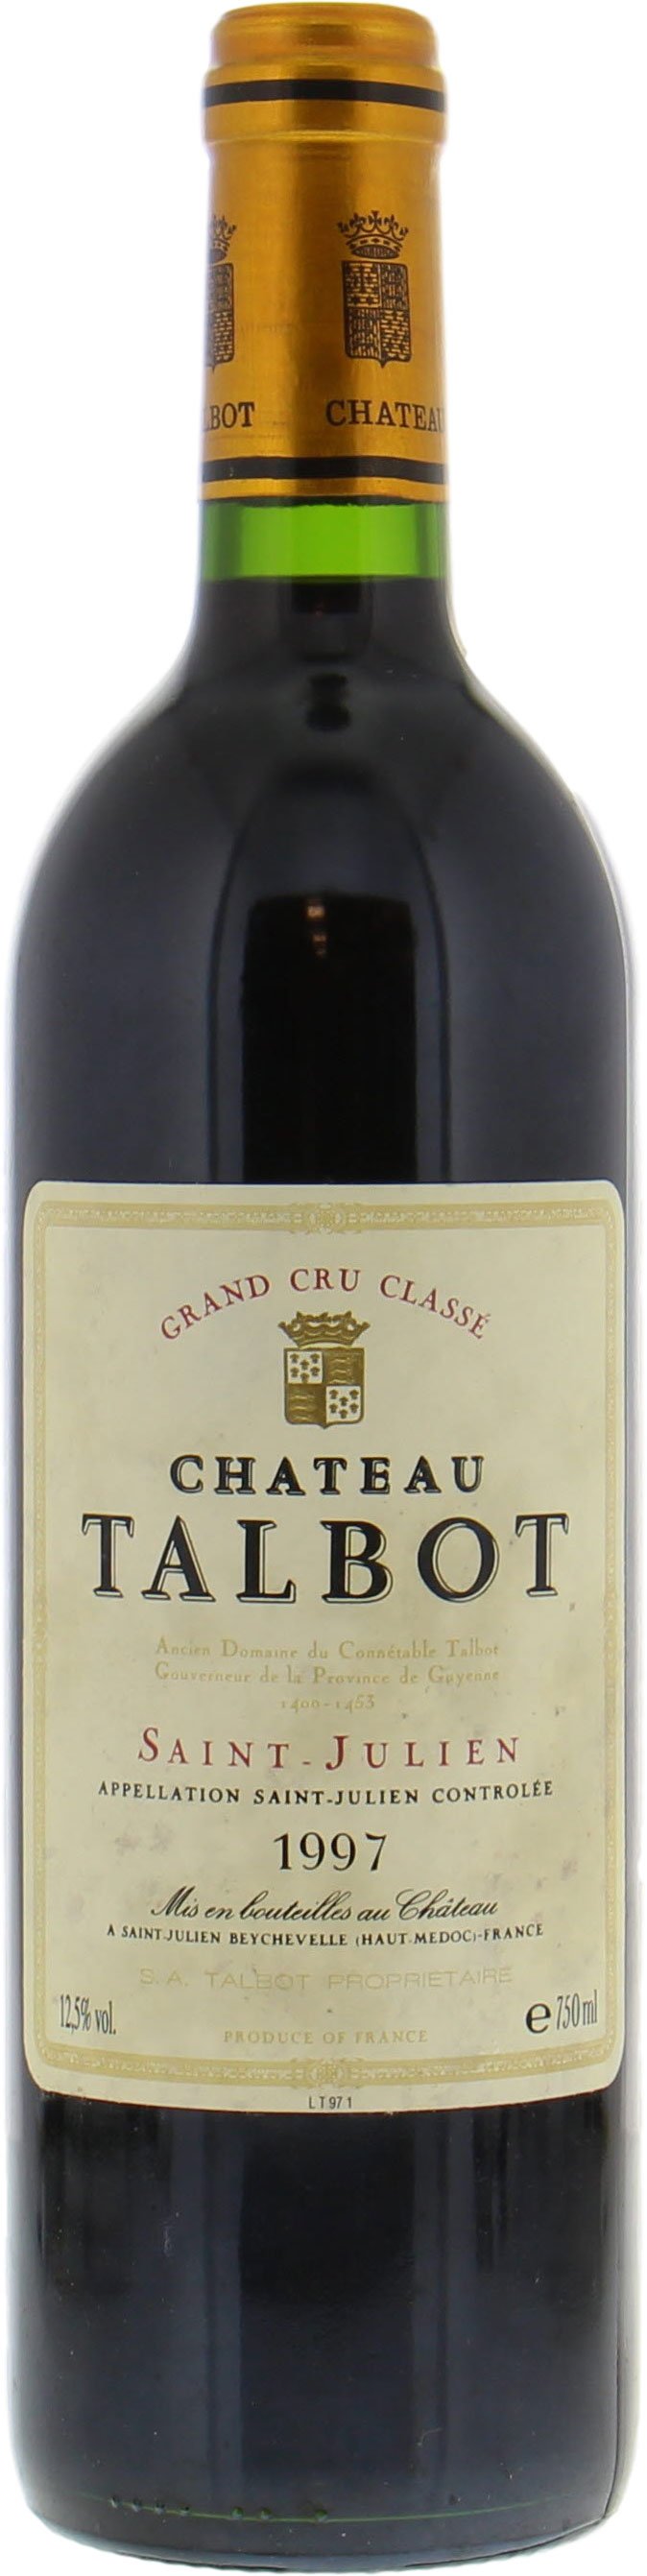 Chateau Talbot - Chateau Talbot 1997 Perfect